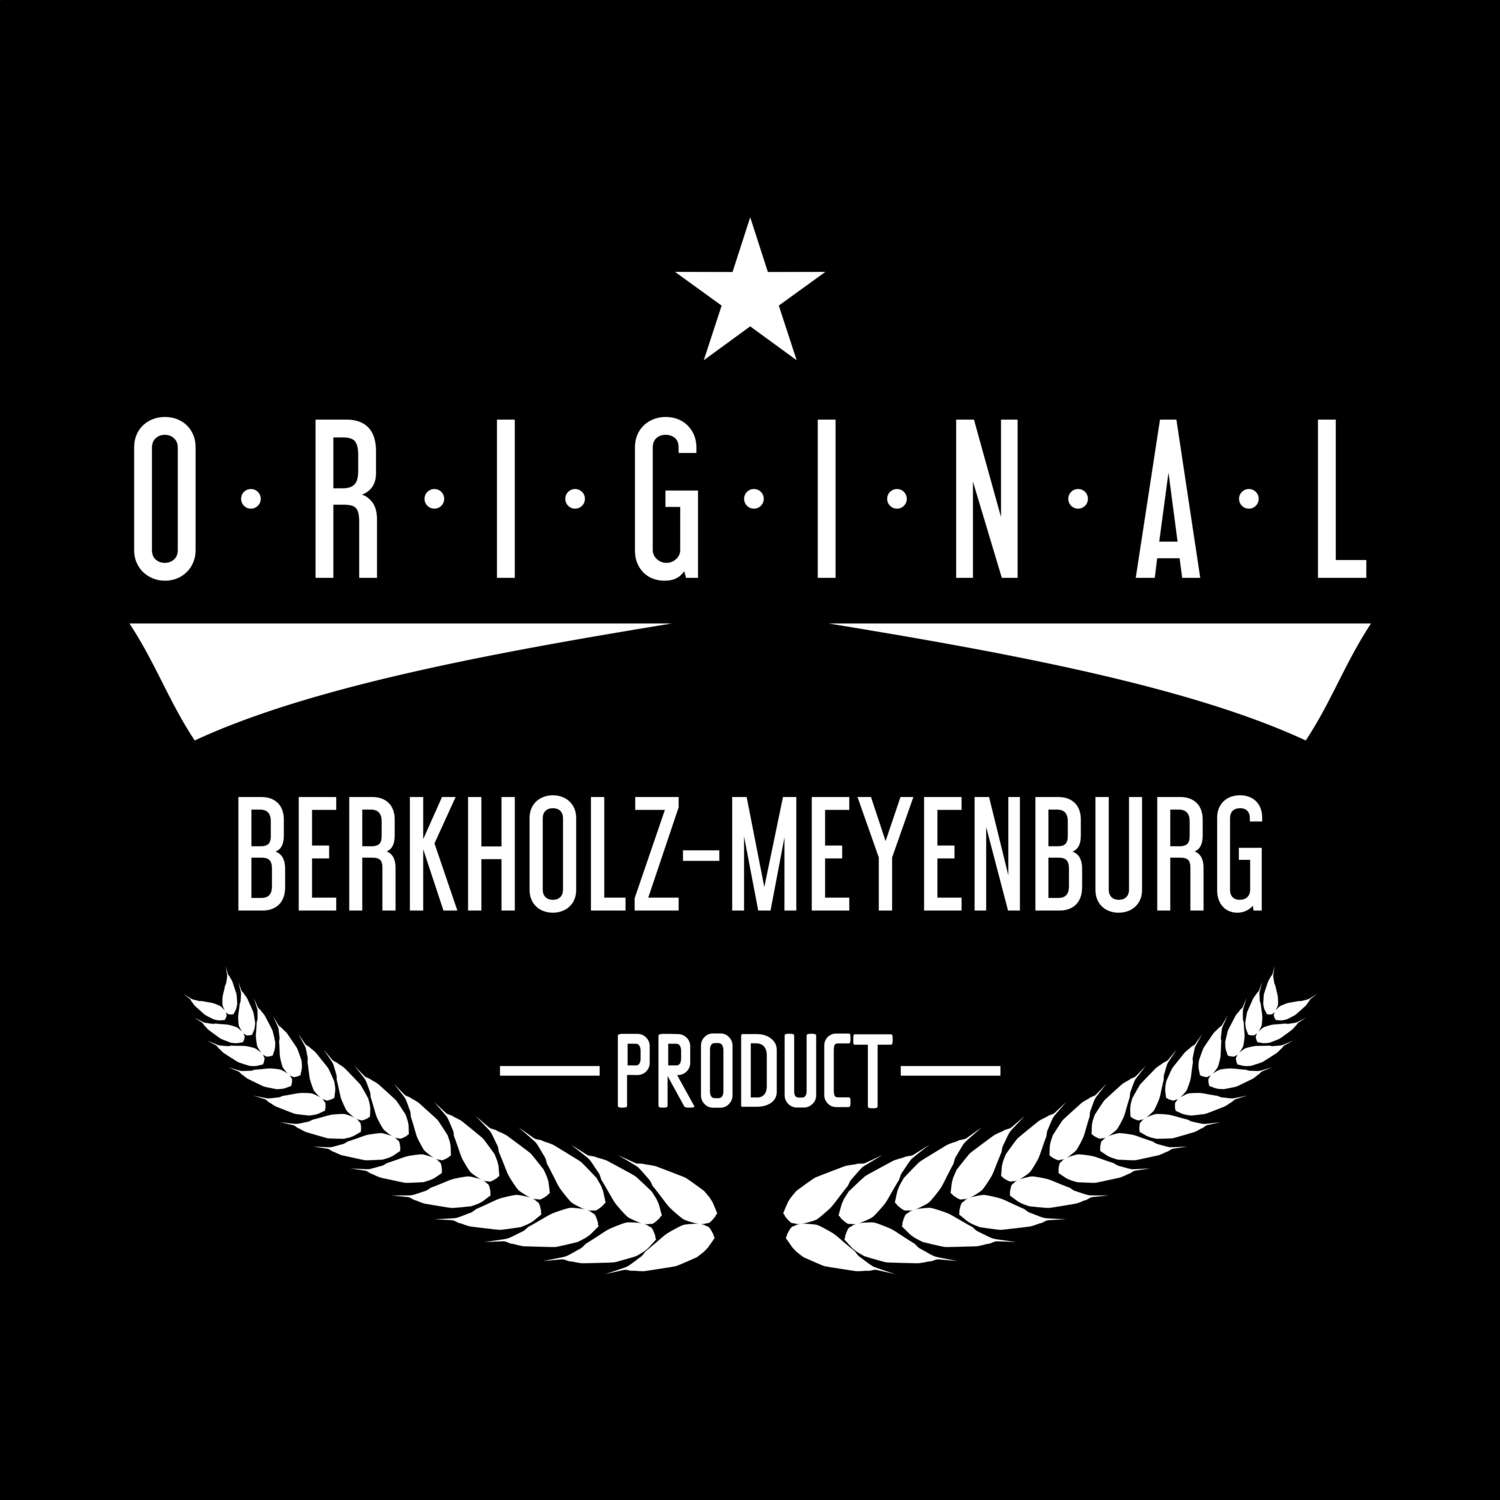 Berkholz-Meyenburg T-Shirt »Original Product«